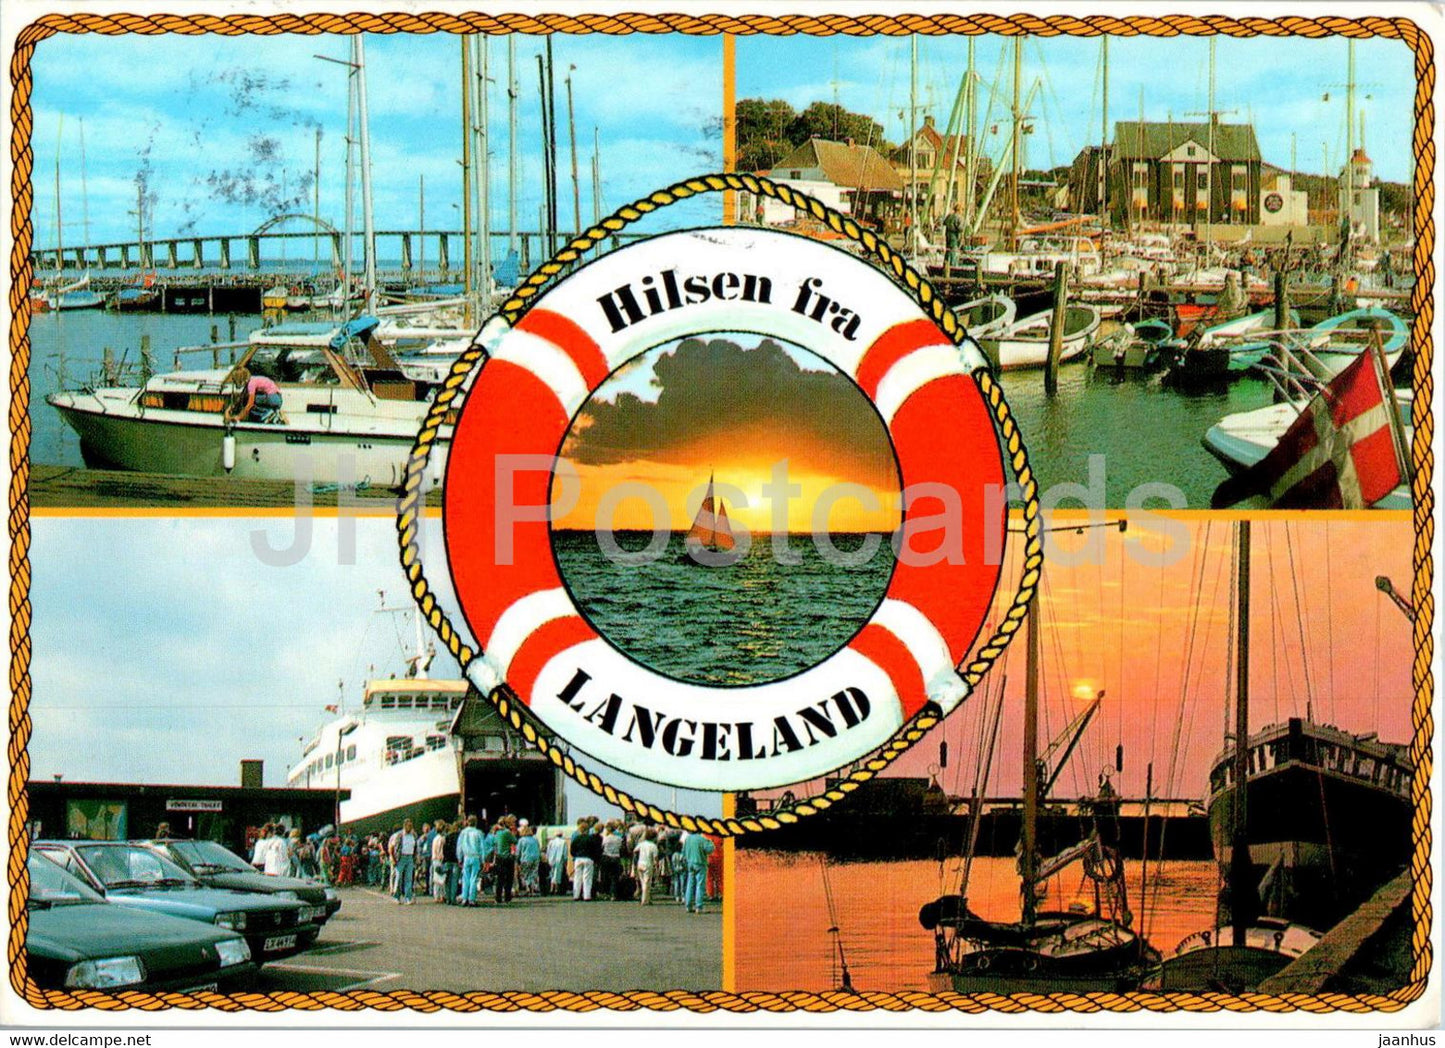 Hilsen fra Langeland - Lystbadehavnen - Lohals - Rudkobing - boat - Denmark - used - JH Postcards